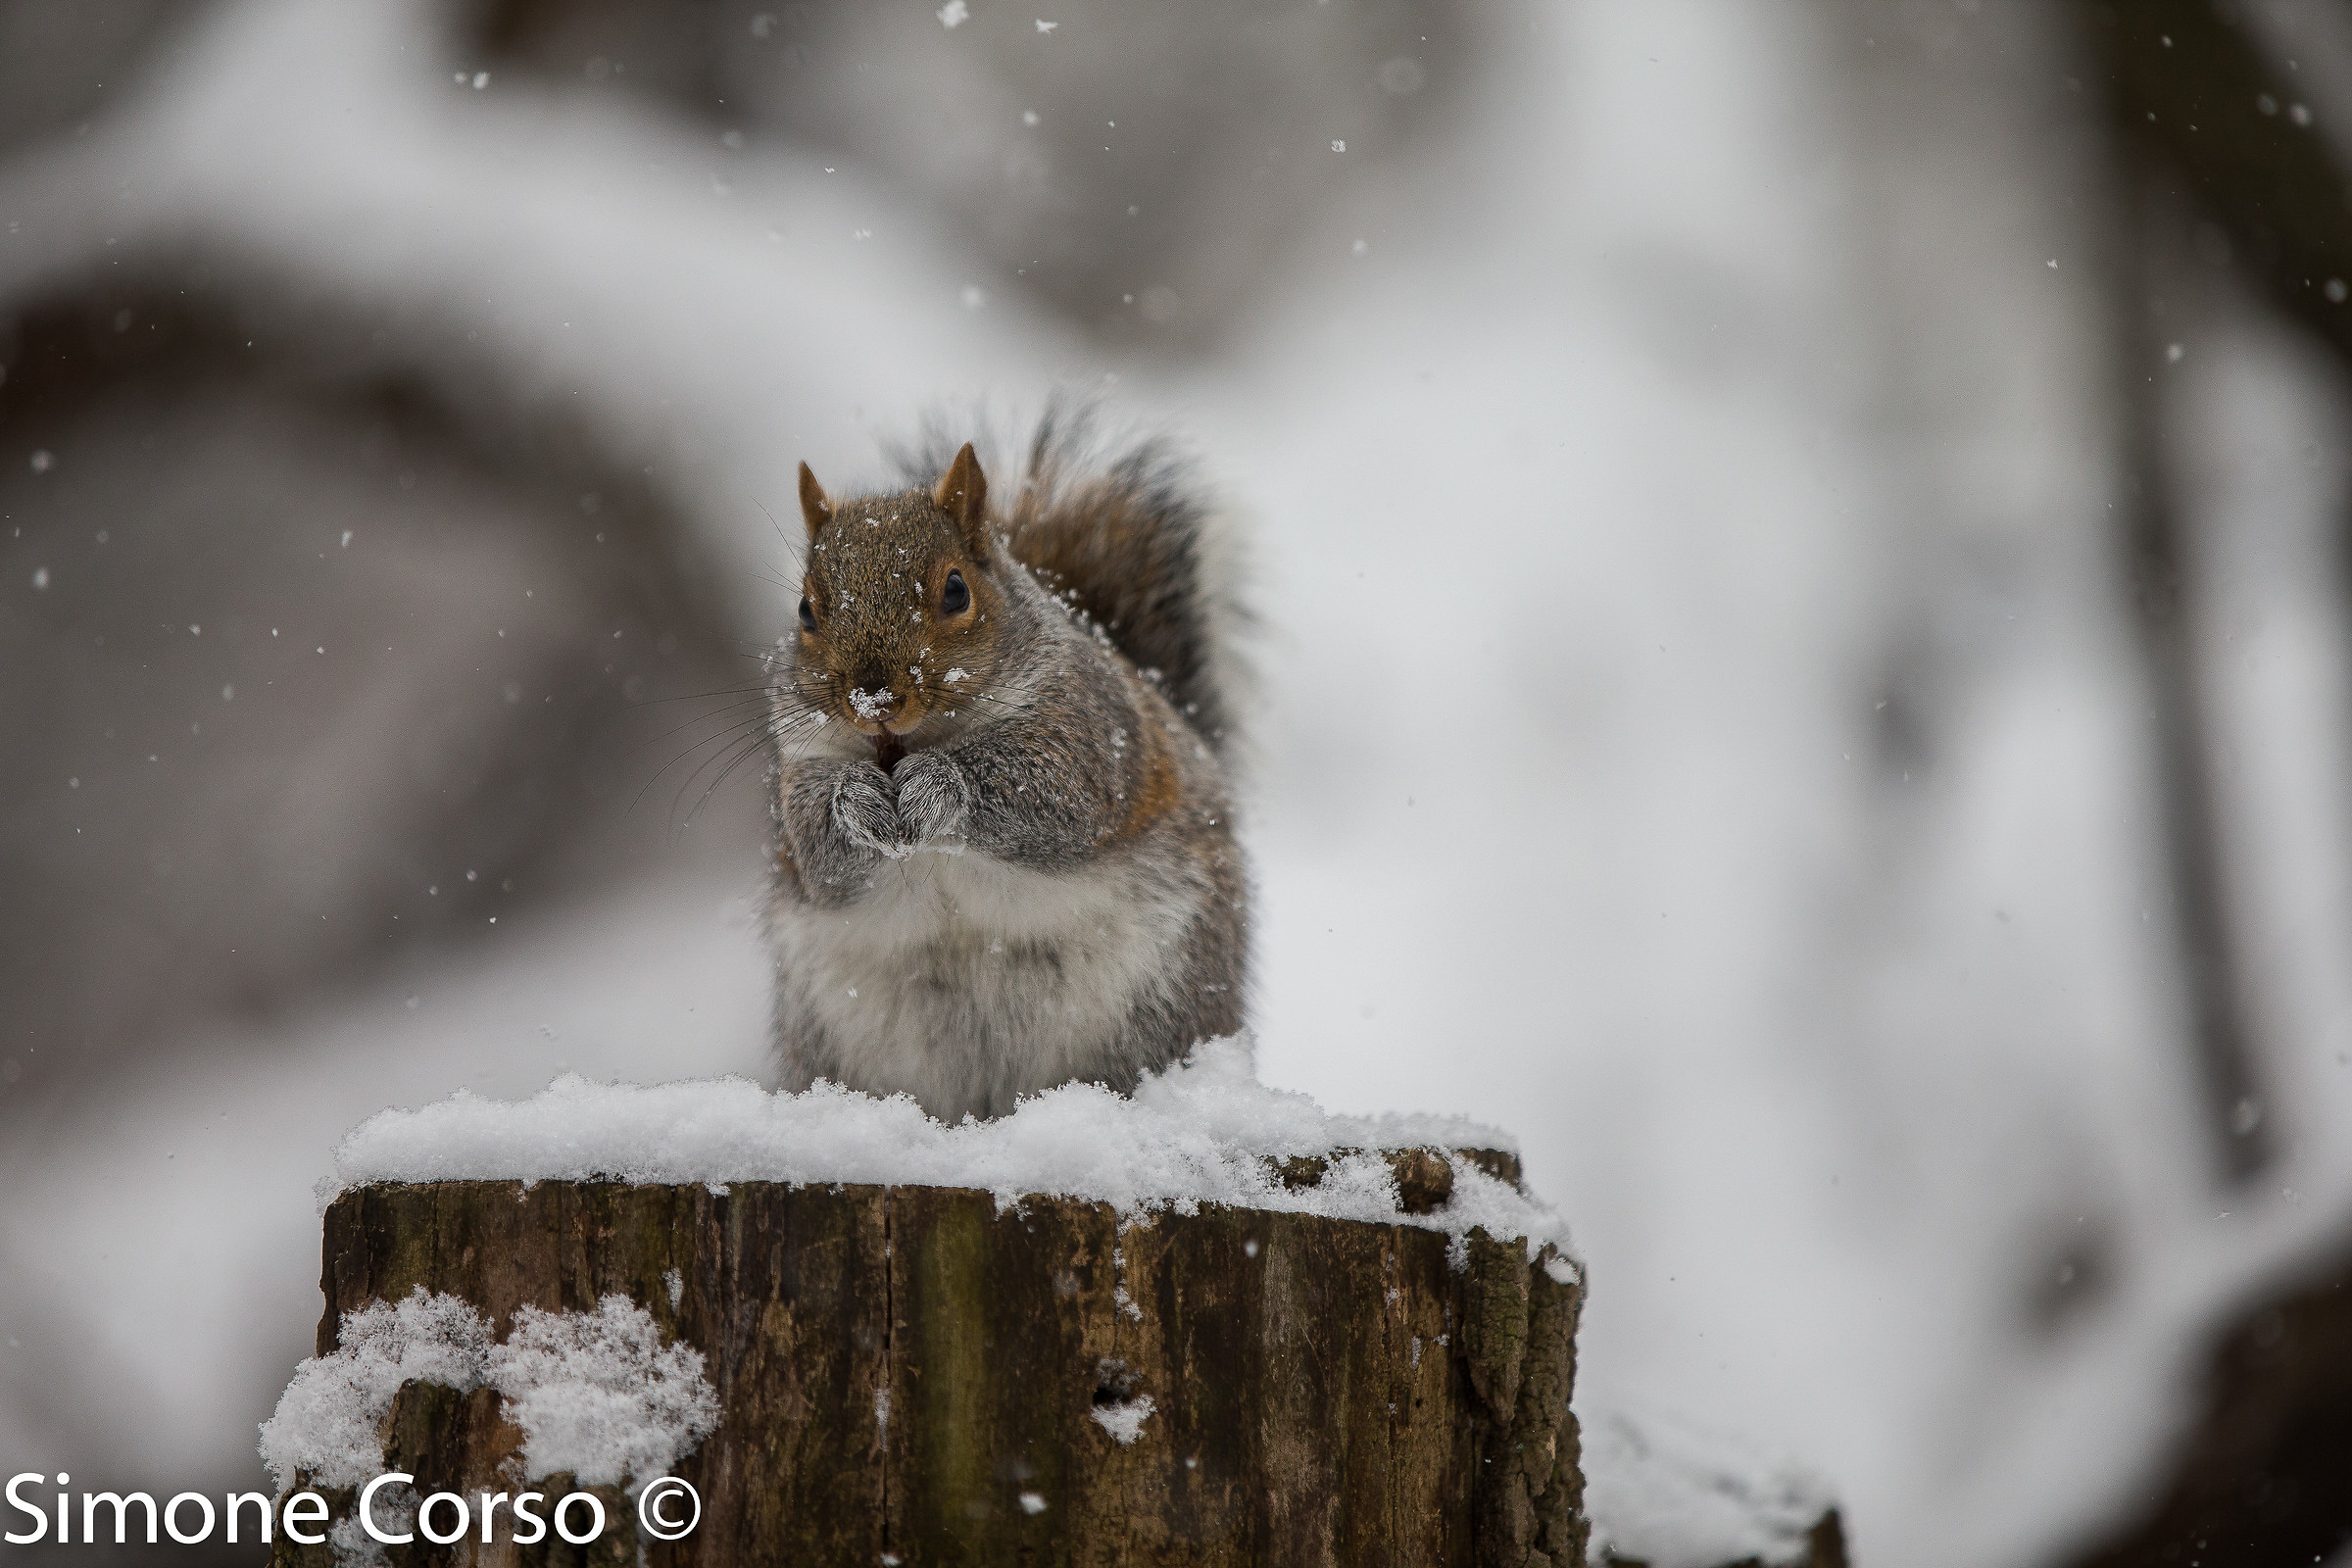 The squirrel "snow"...